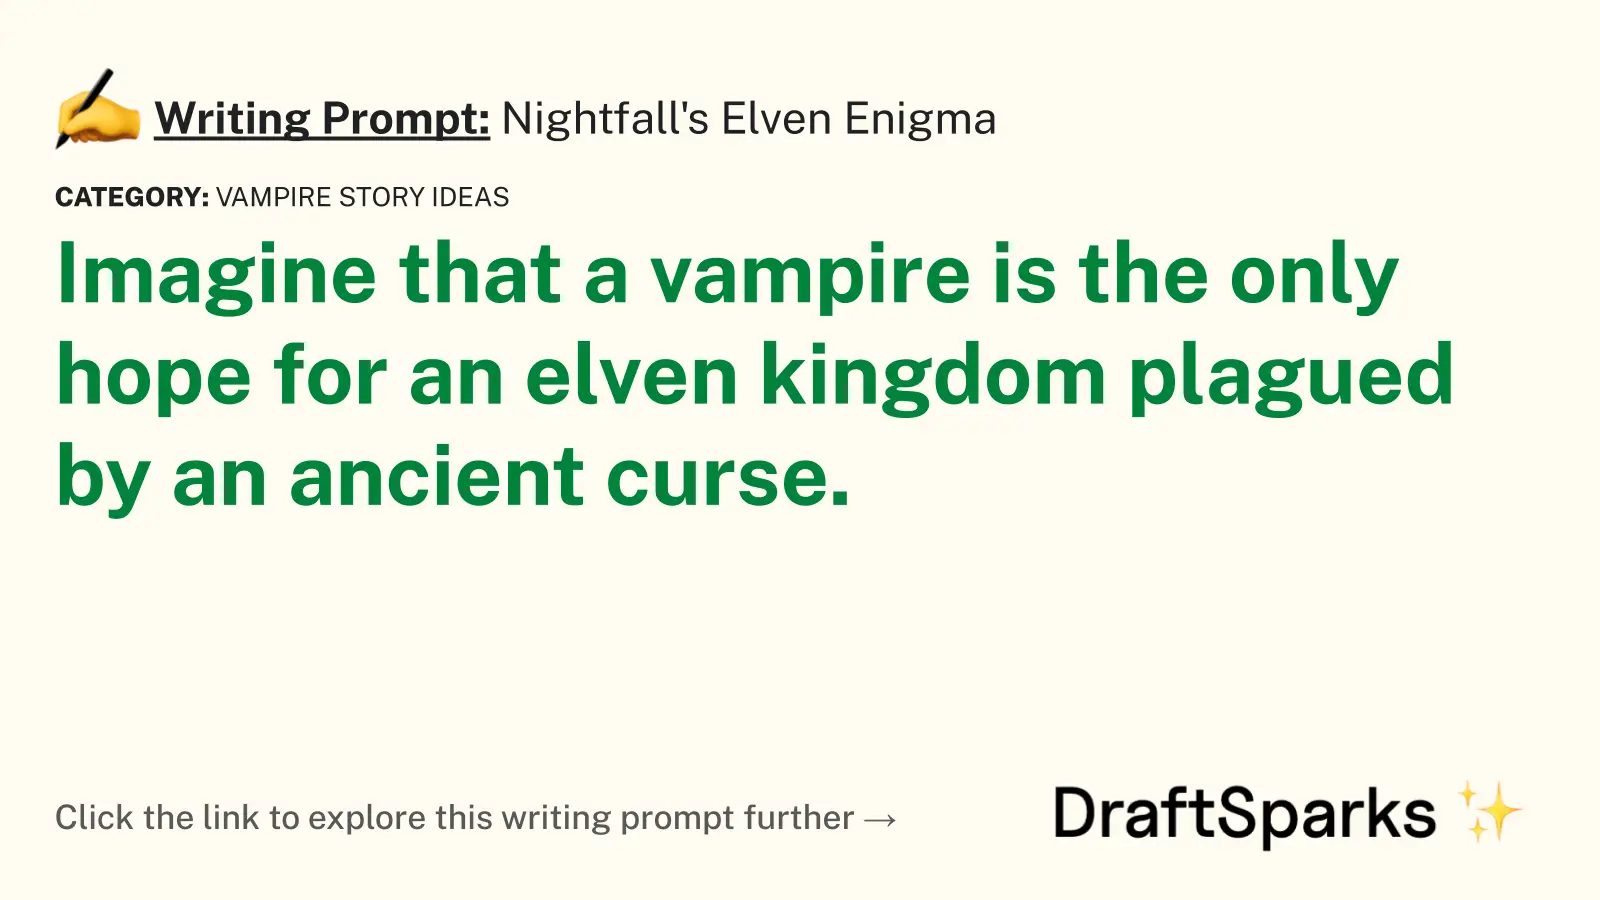 Nightfall’s Elven Enigma